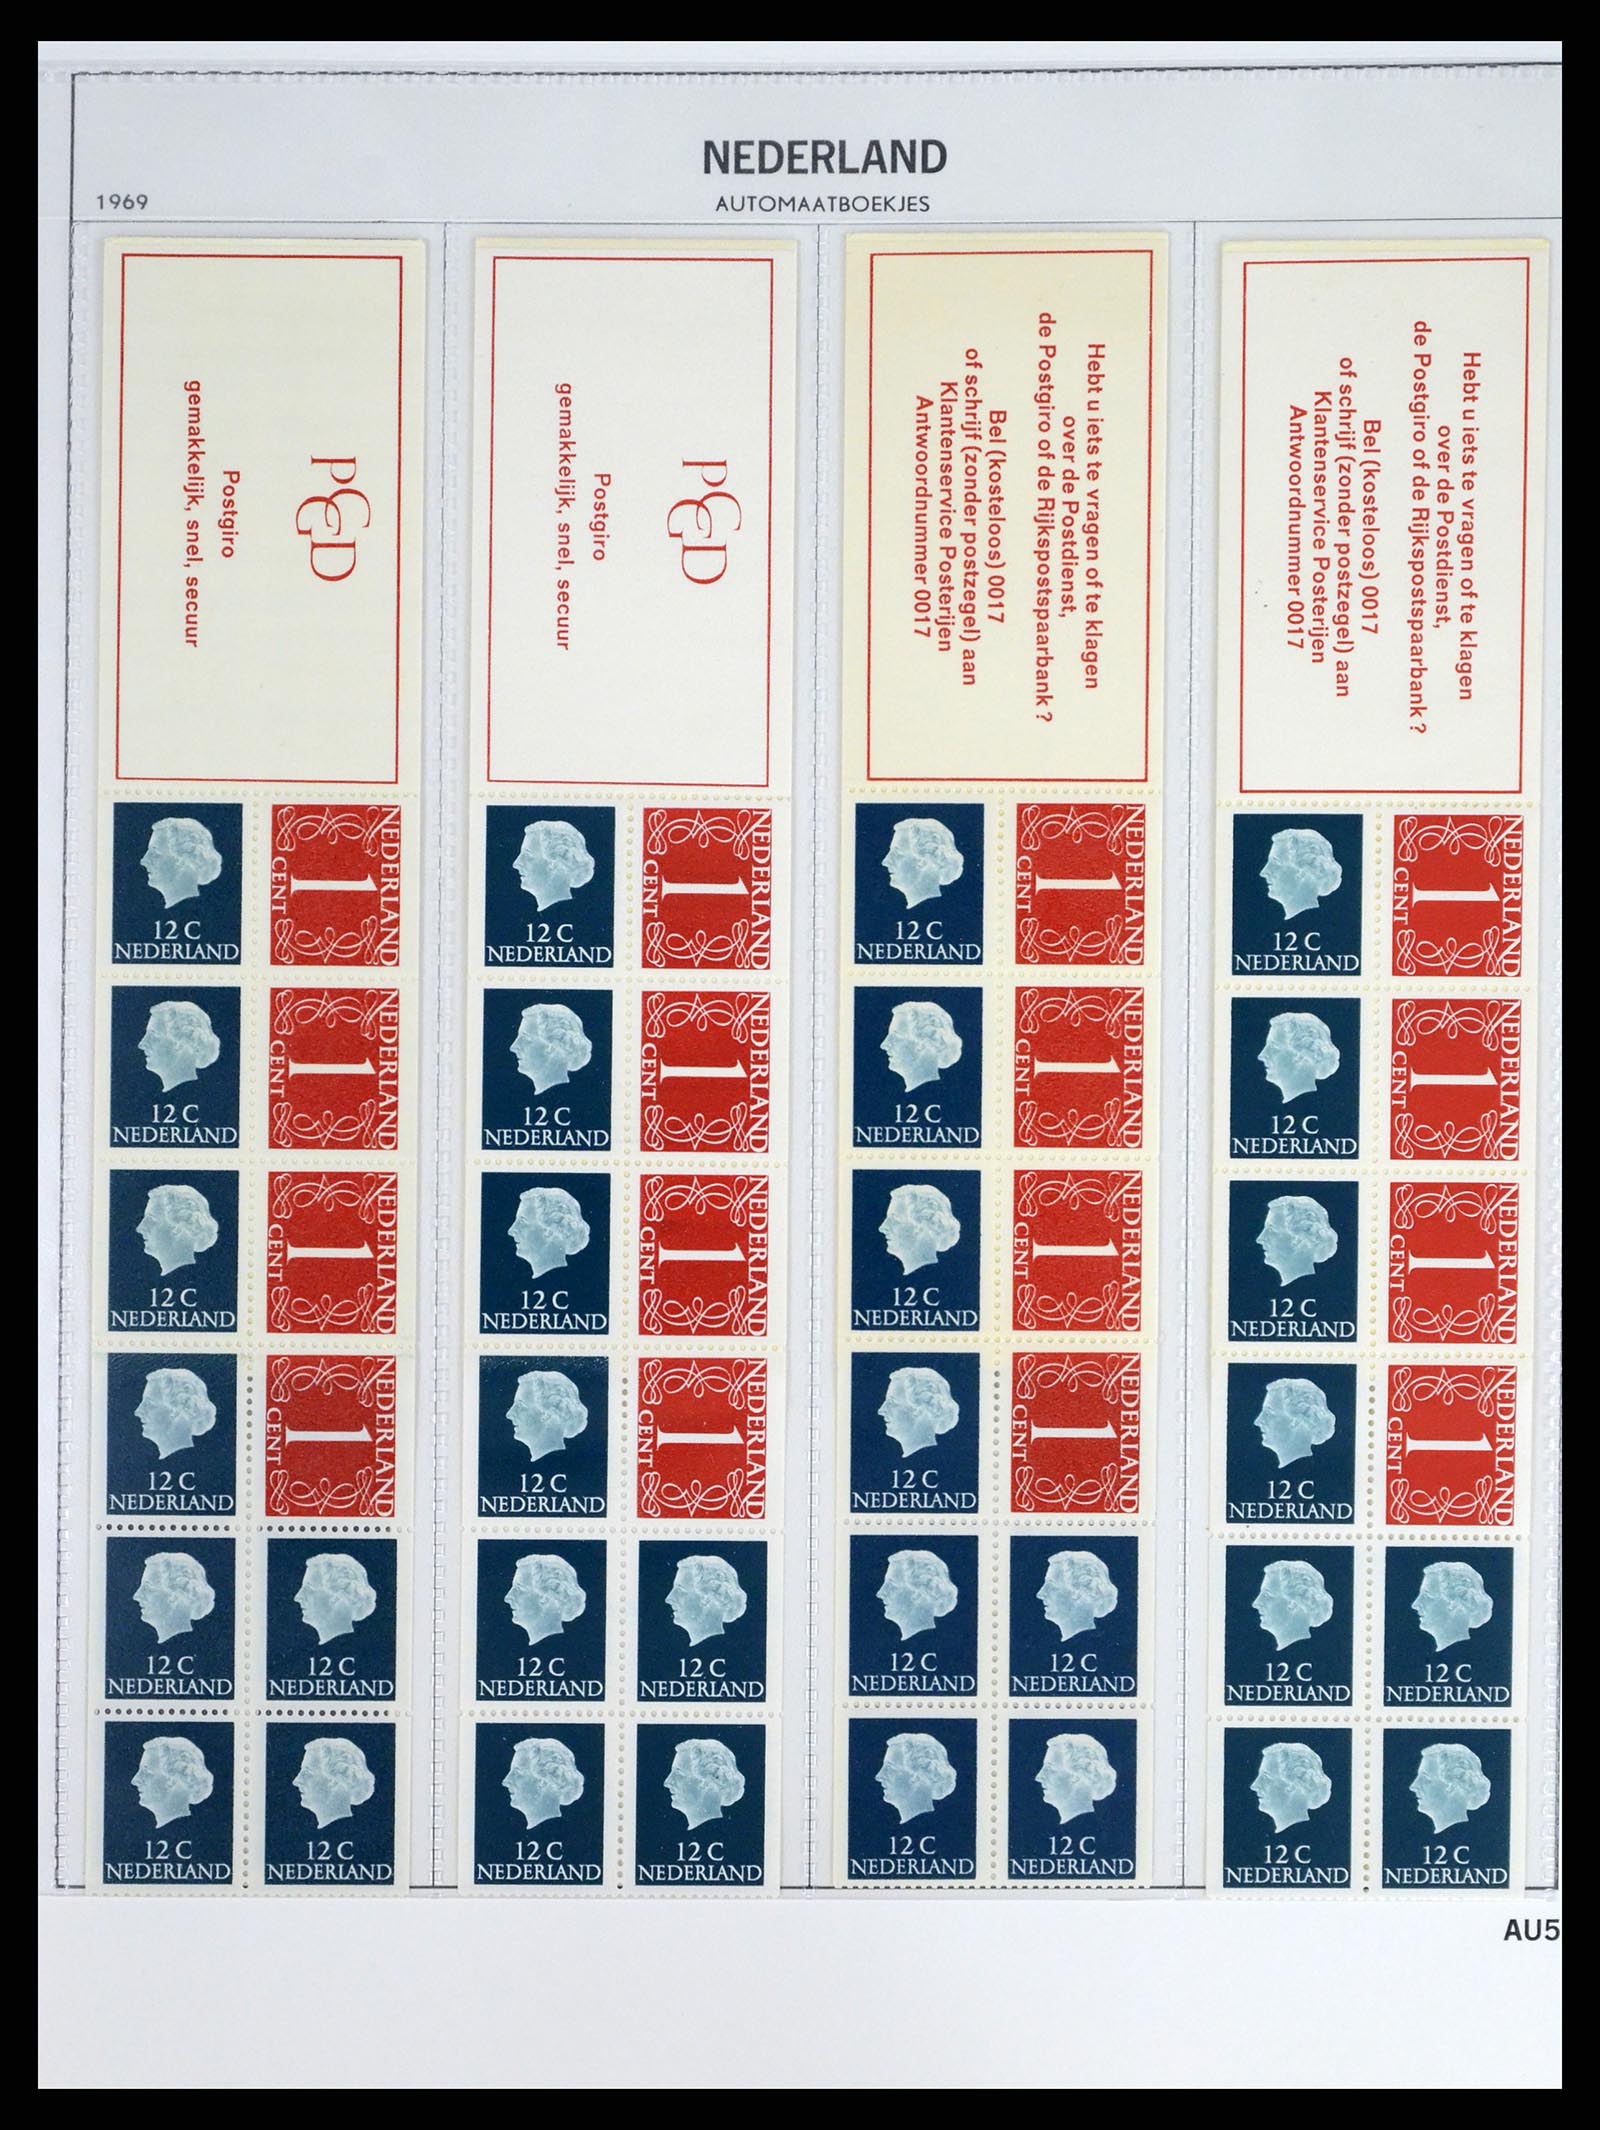 37331 006 - Stamp collection 37331 Netherlands stamp booklets 1964-2002.